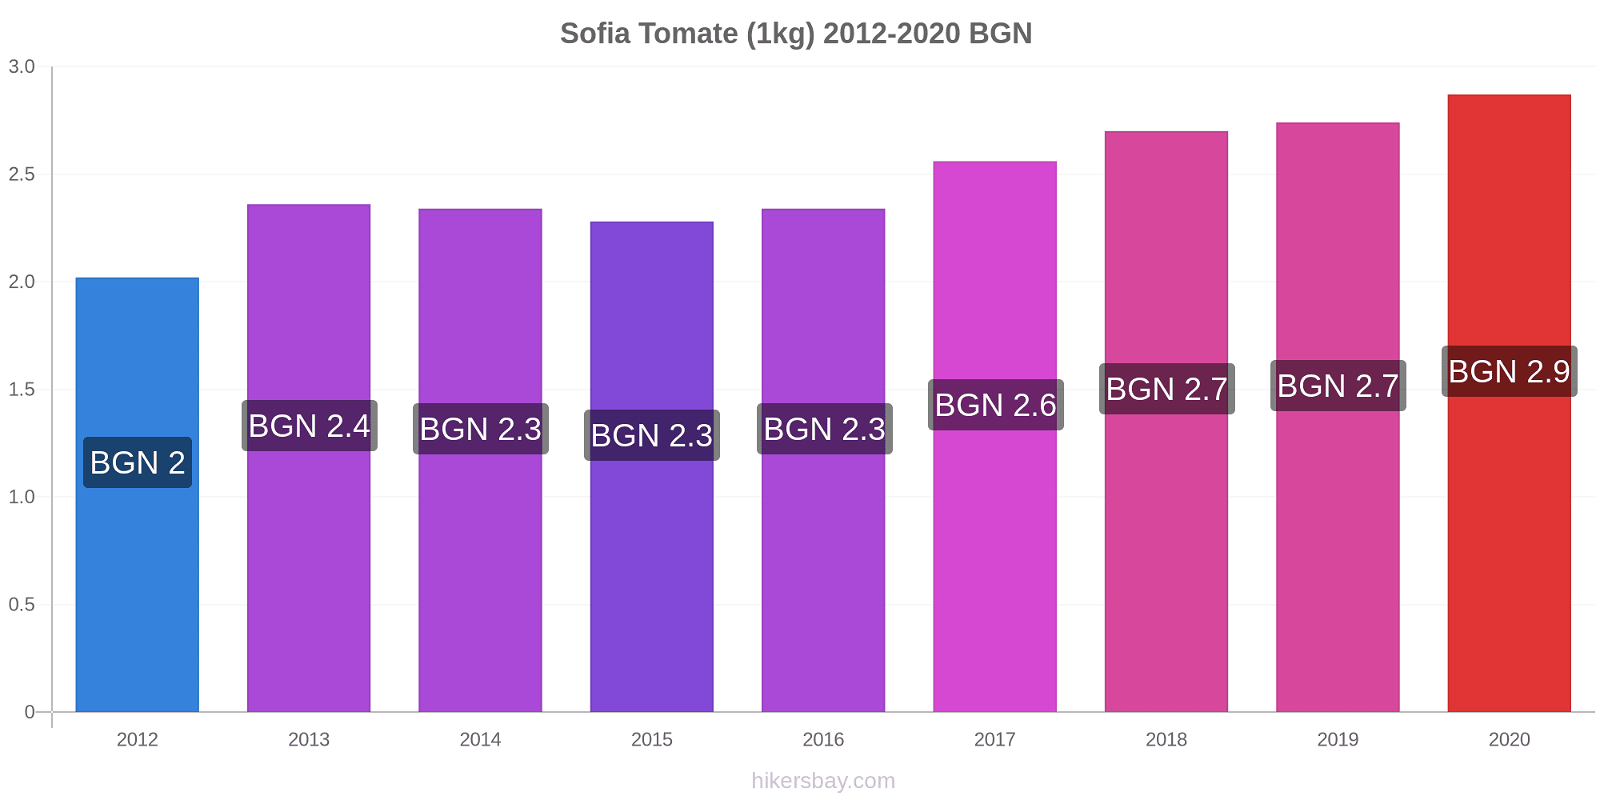 Sofia changements de prix Tomate (1kg) hikersbay.com